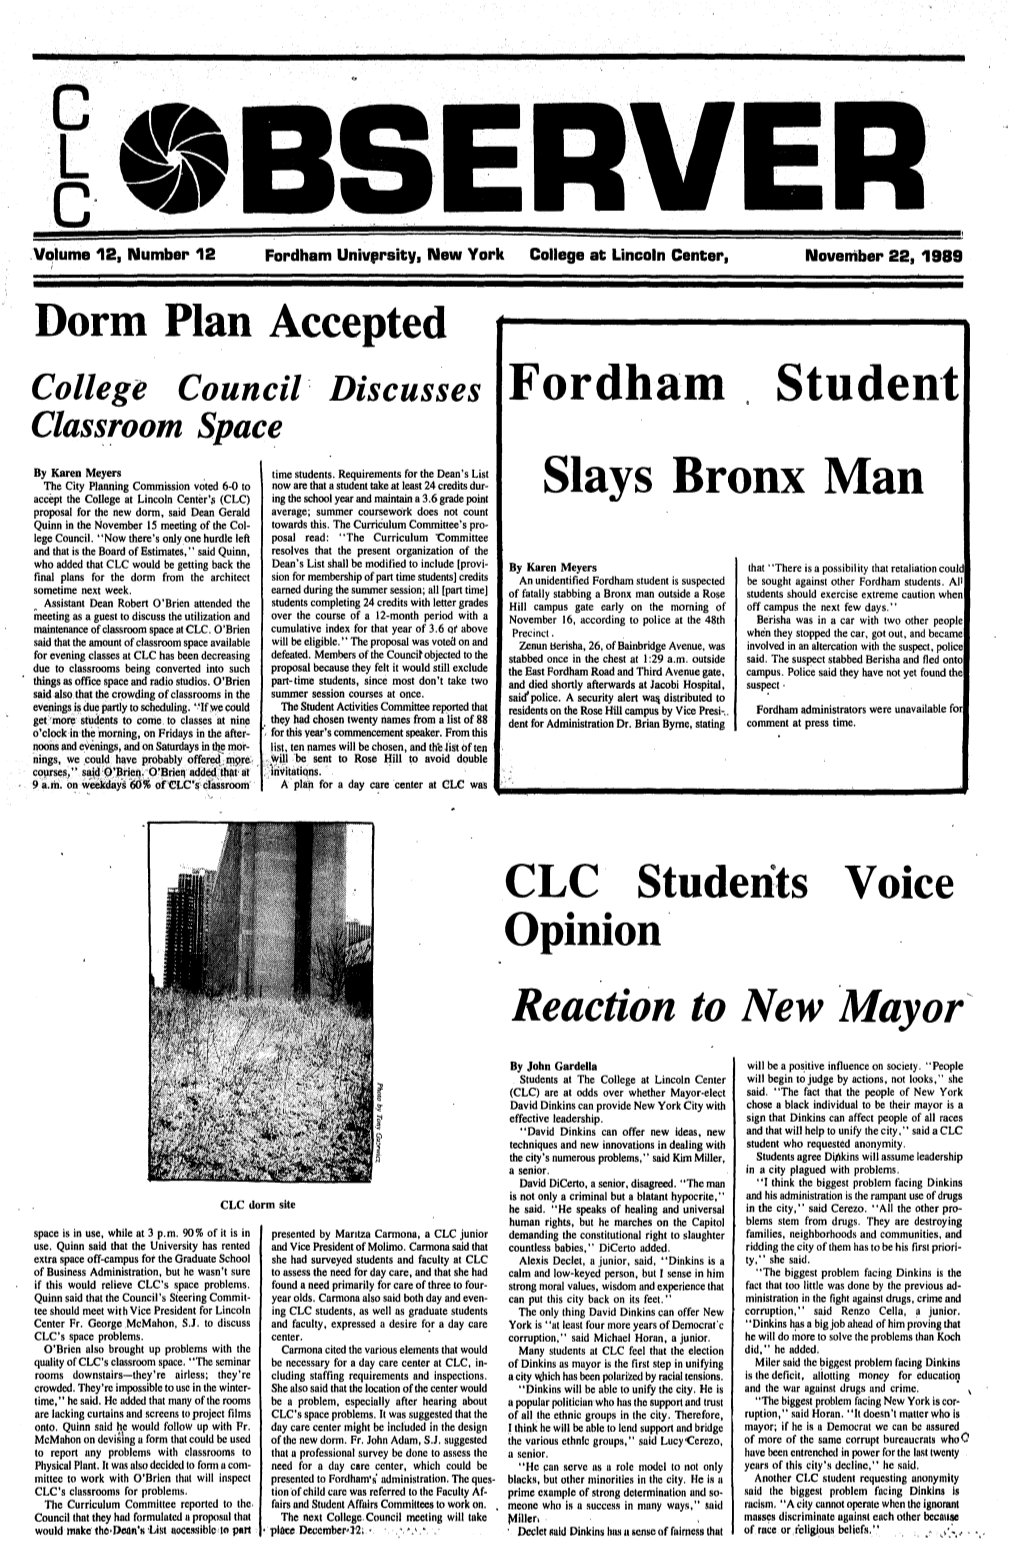 Fordham Student Slays Bronx